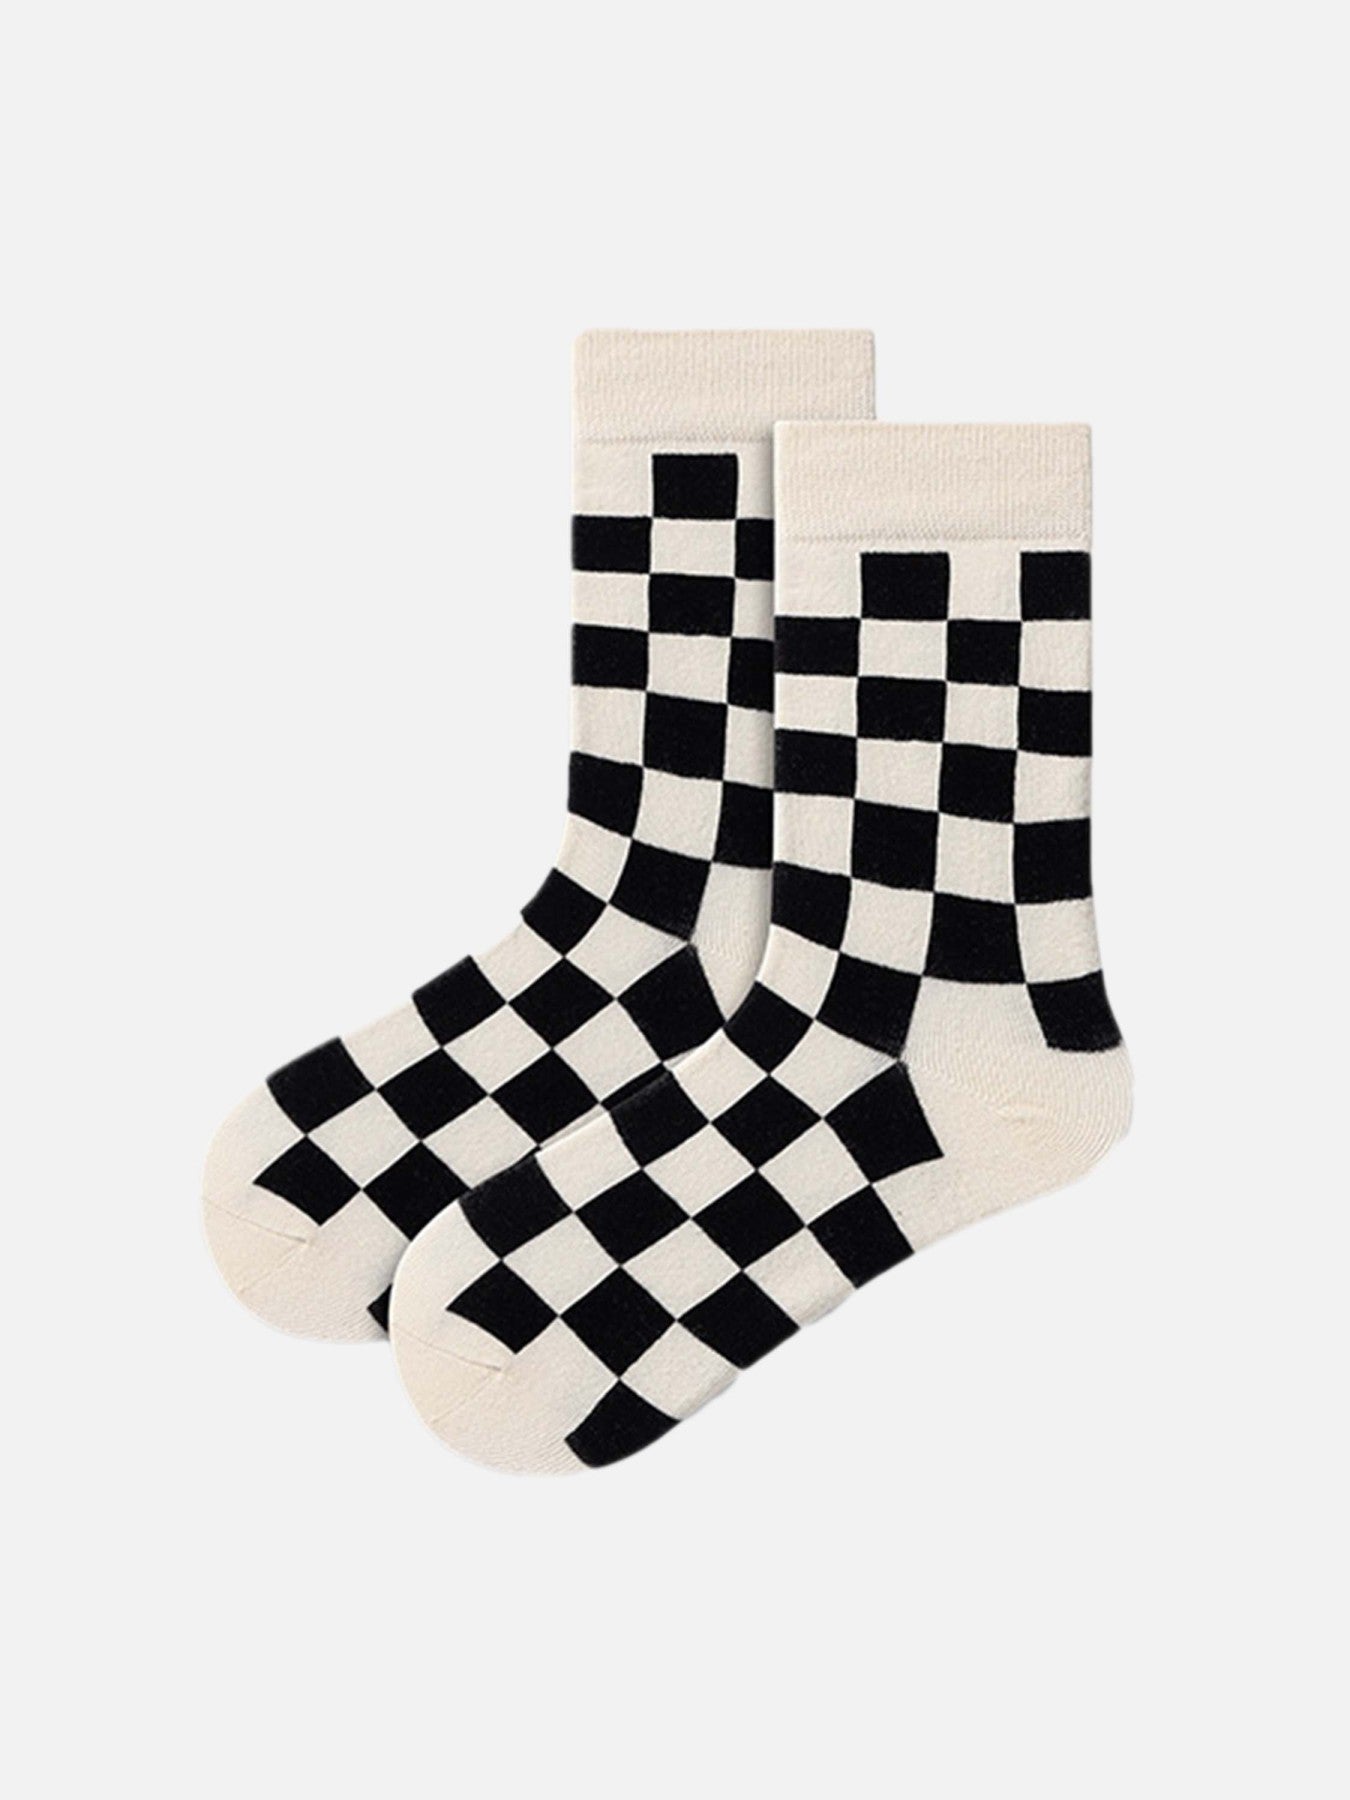 American Black And White Checkerboard Mid-calf Socks - 2369